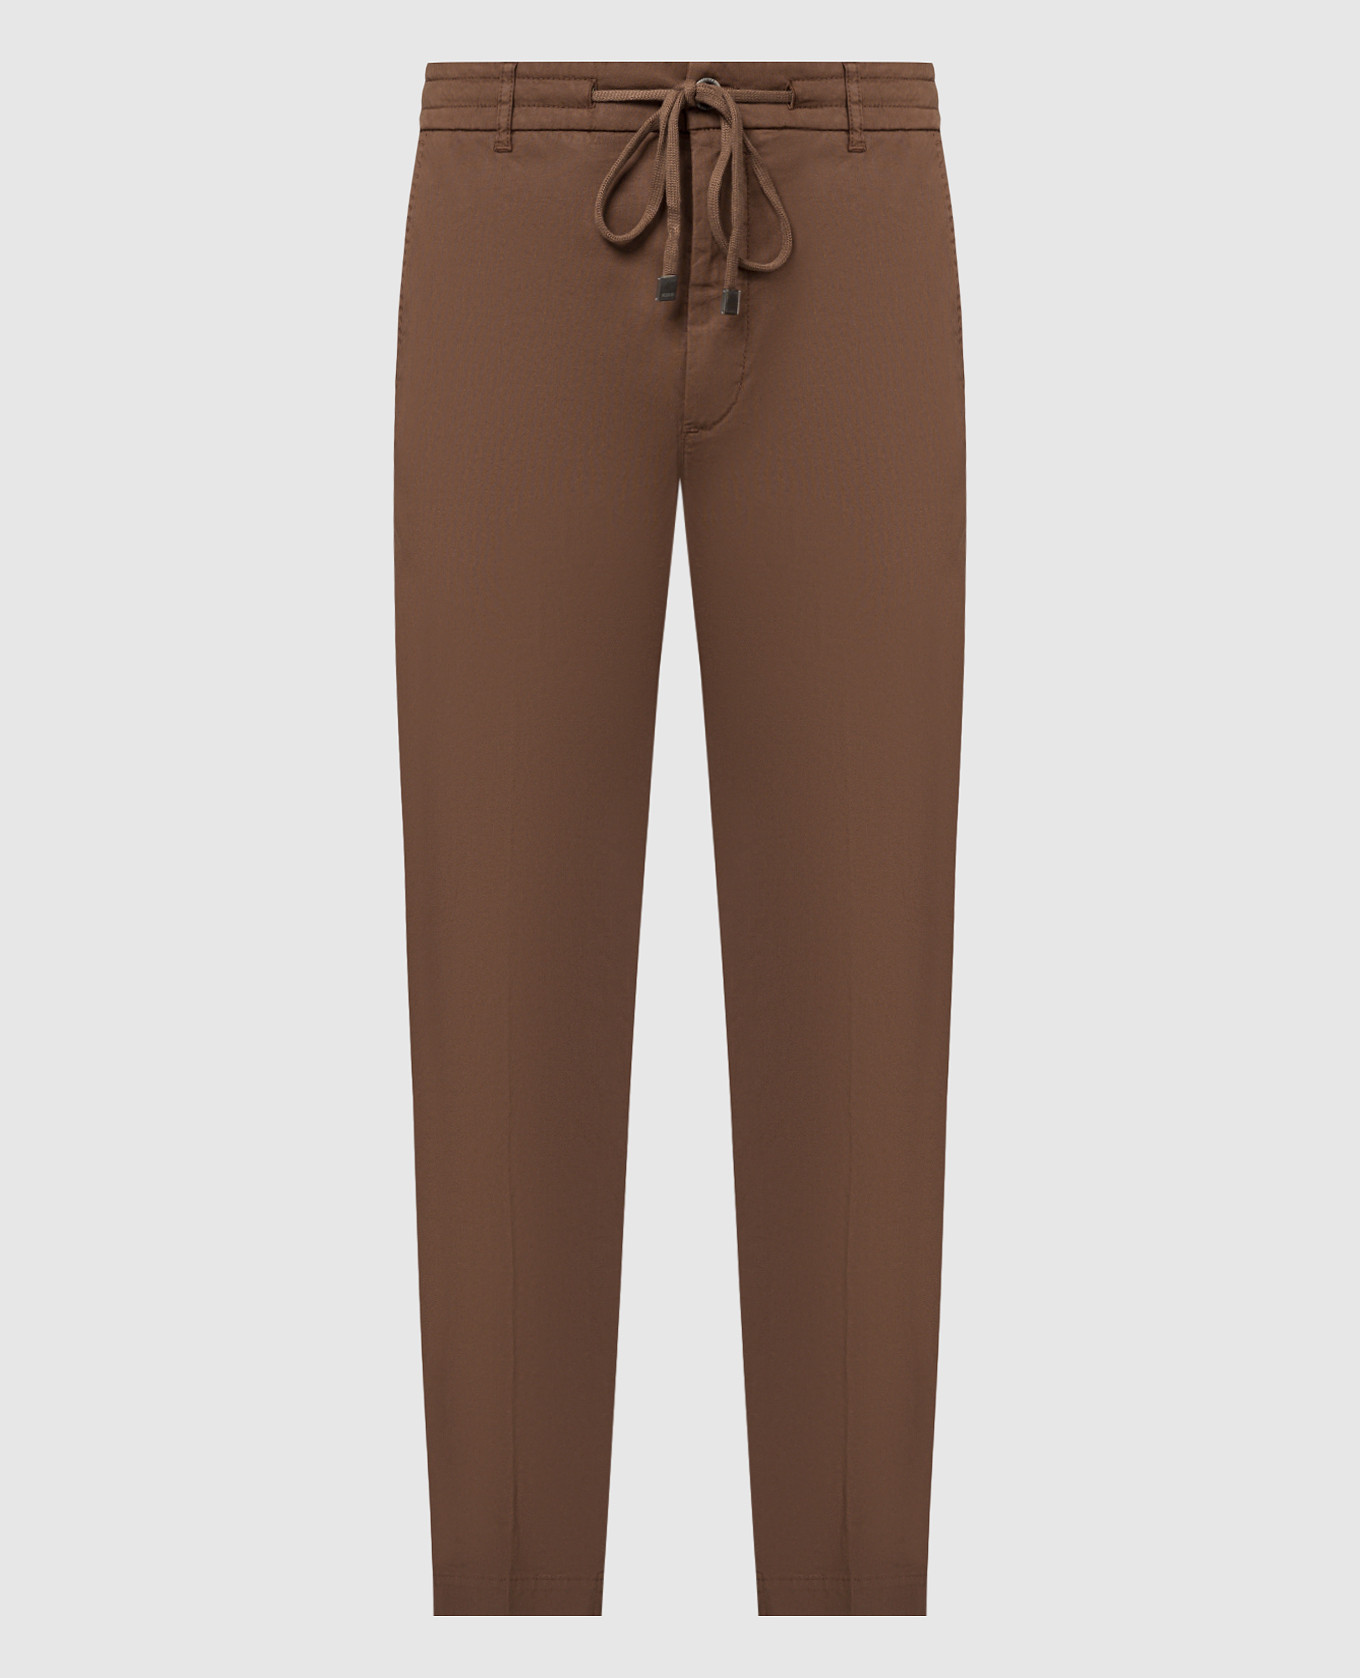 Brown pants with metallic logo